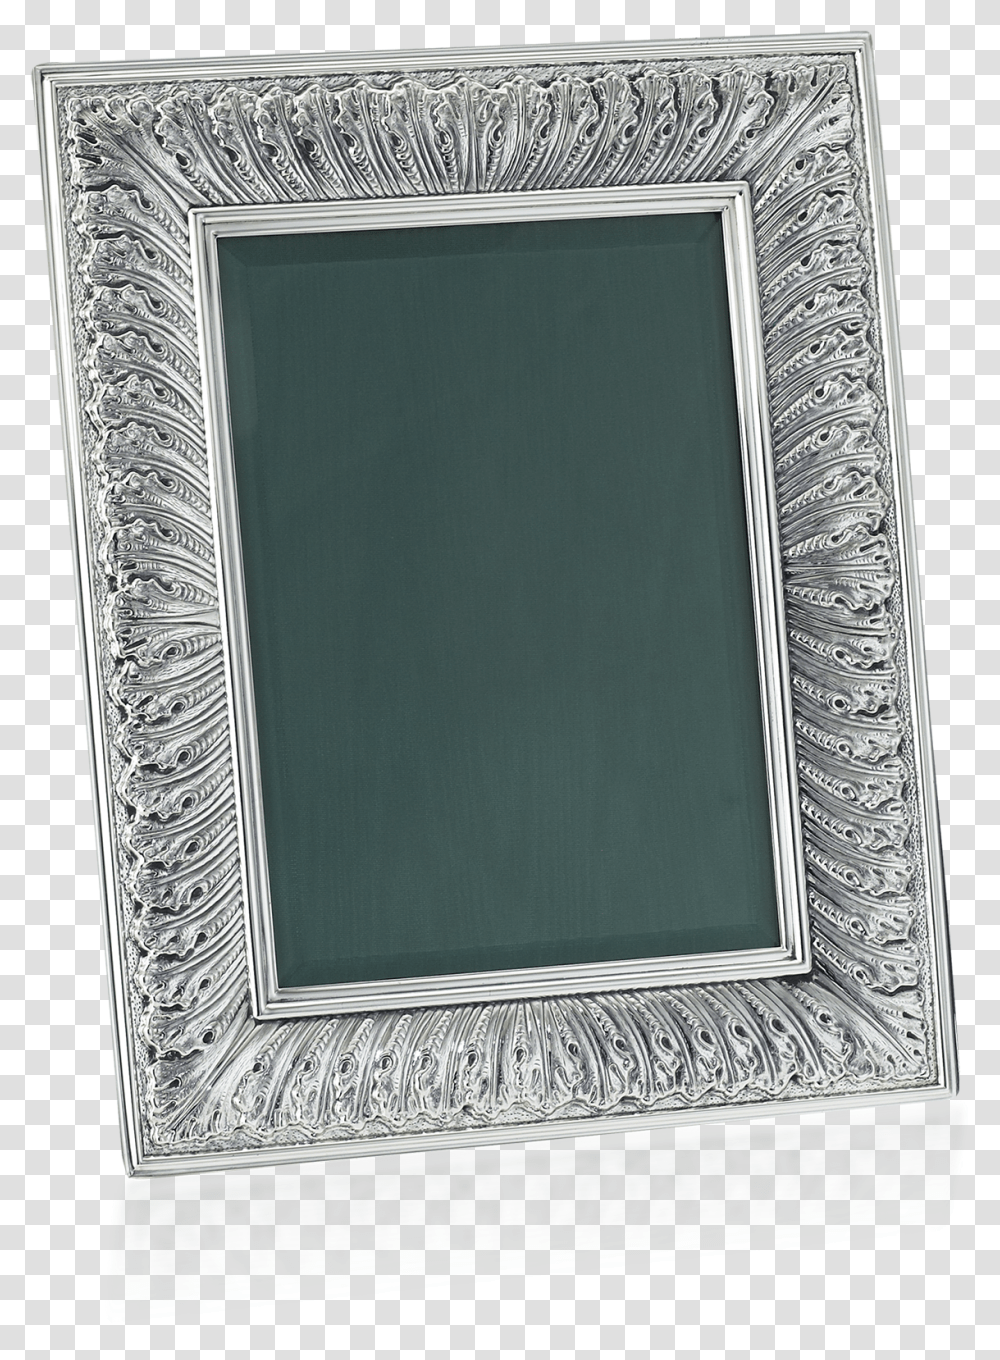 Buccellati Frames Linenfold Frames Picture Frame, Rug, Painting, Mirror Transparent Png